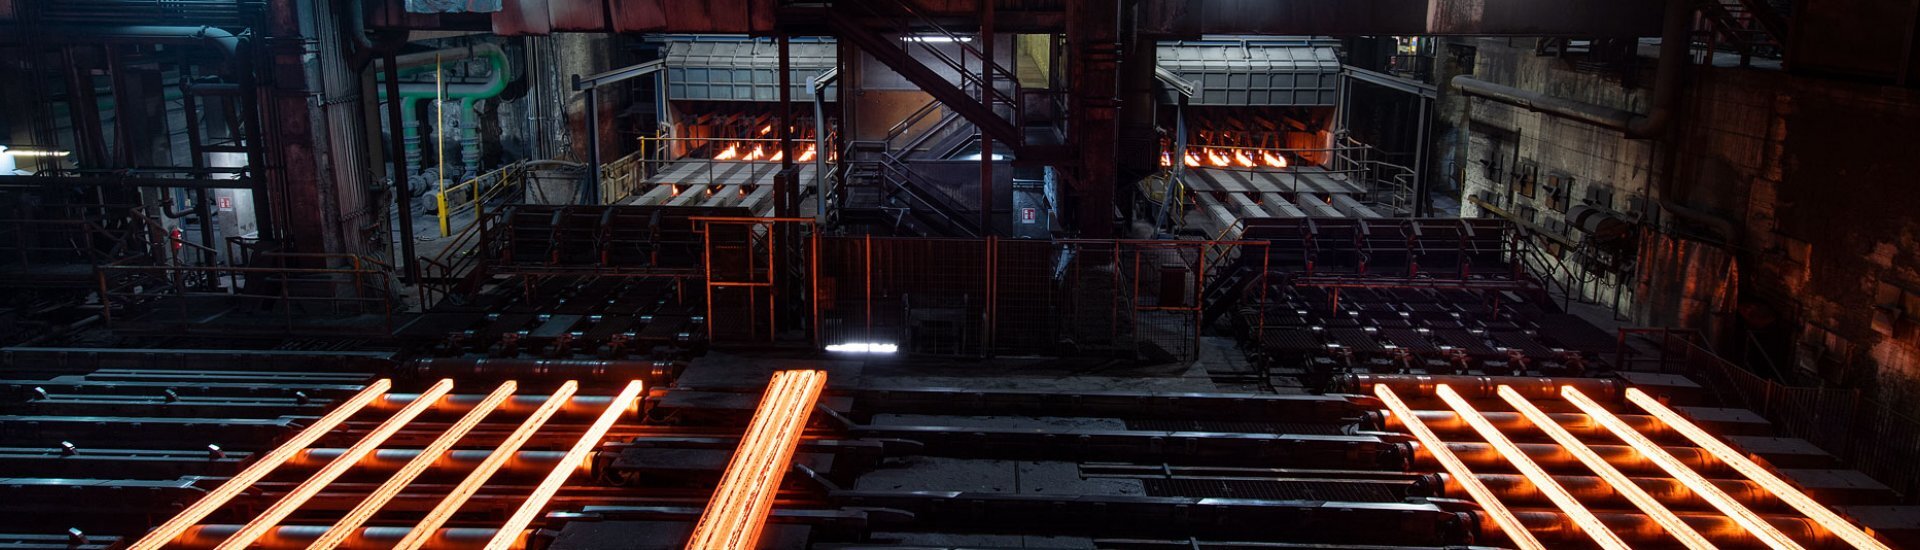 Alfa Acciai Steel Mill 